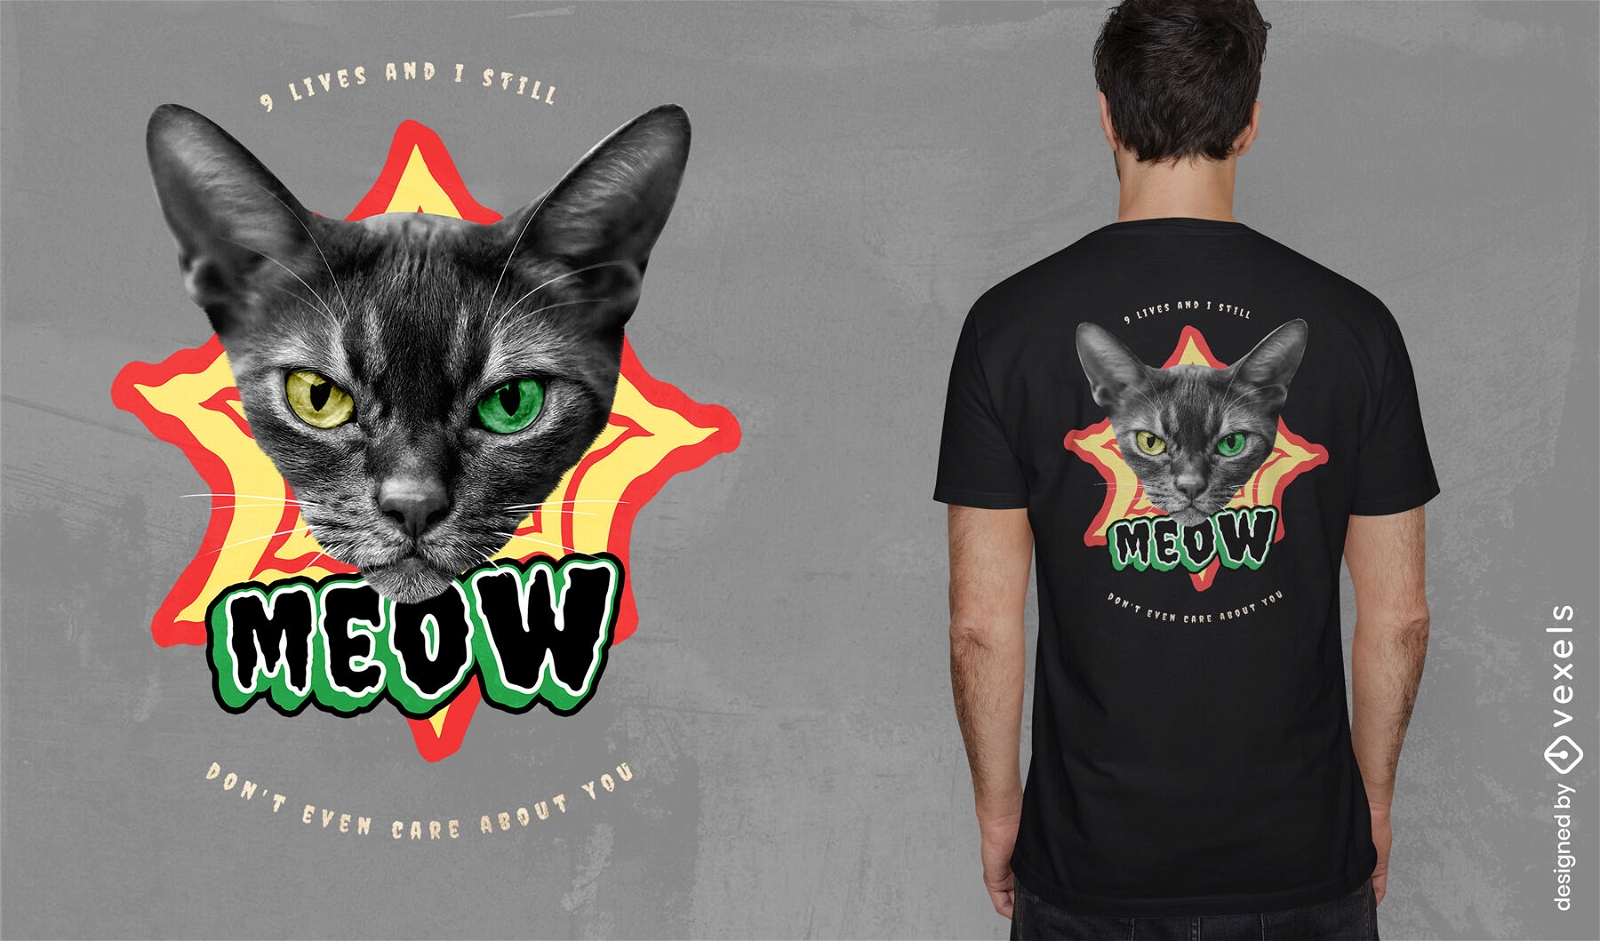 Tierfotografisches T-Shirt PSD der verärgerten Katze